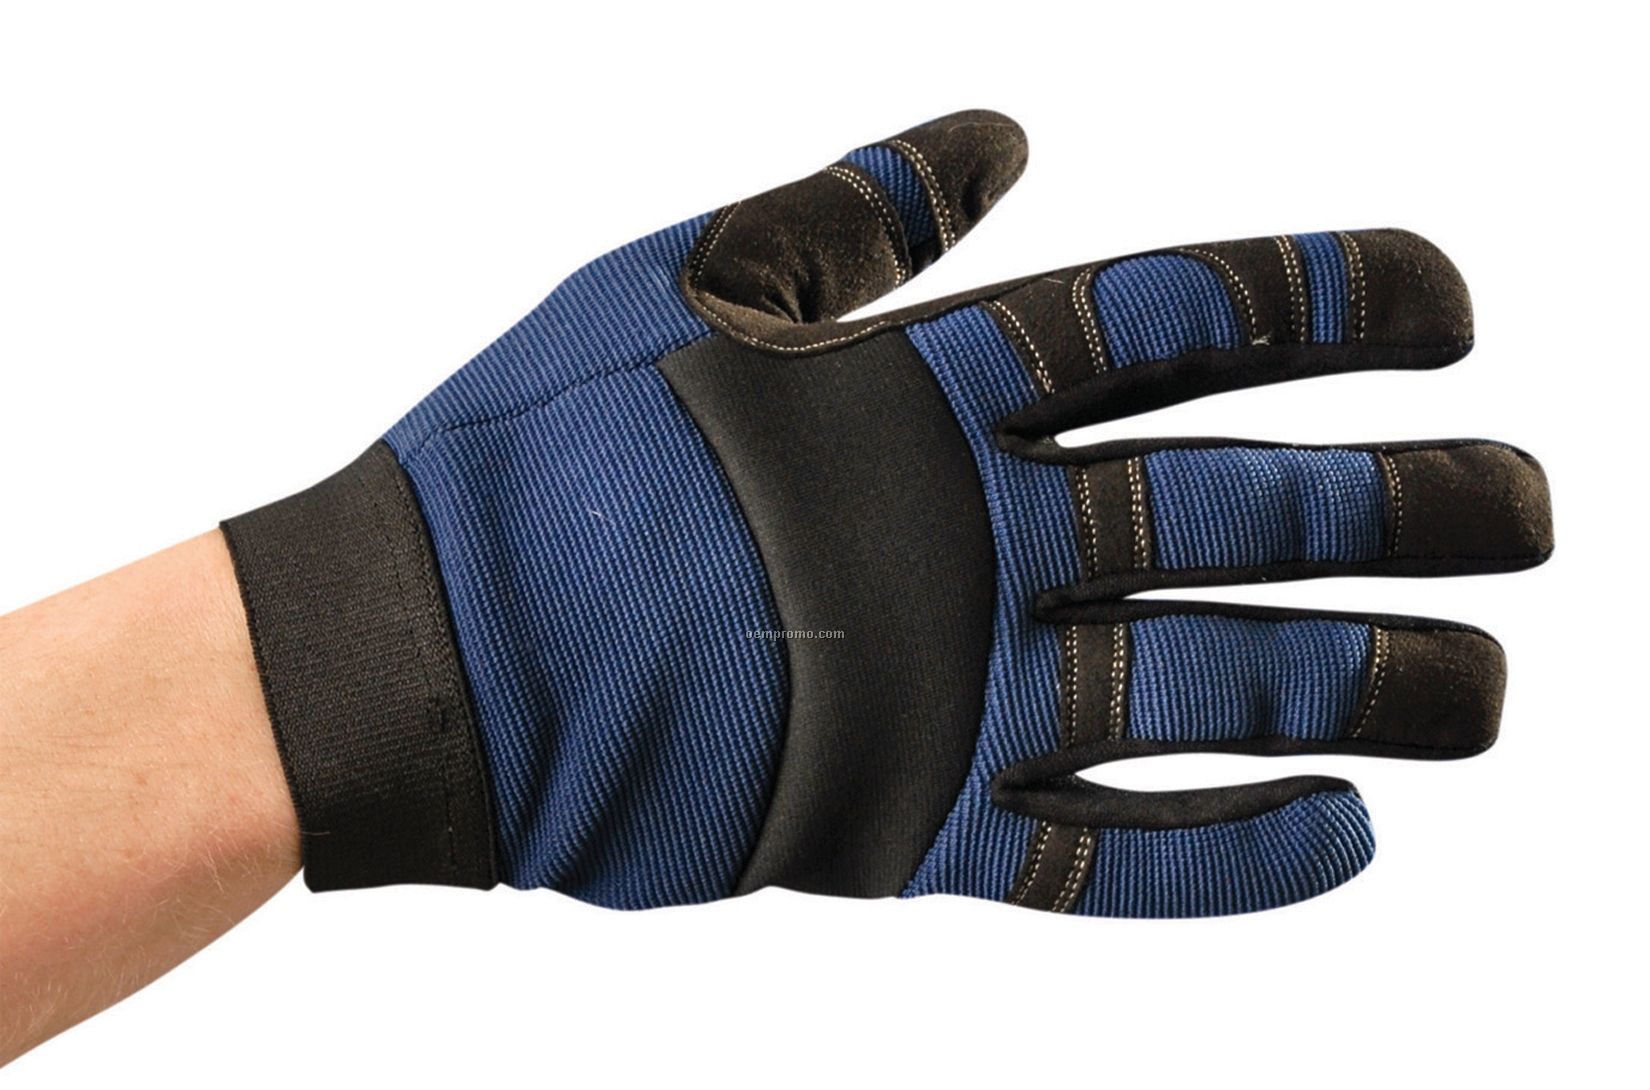 Value Gulfport Mechanics Plus Glove